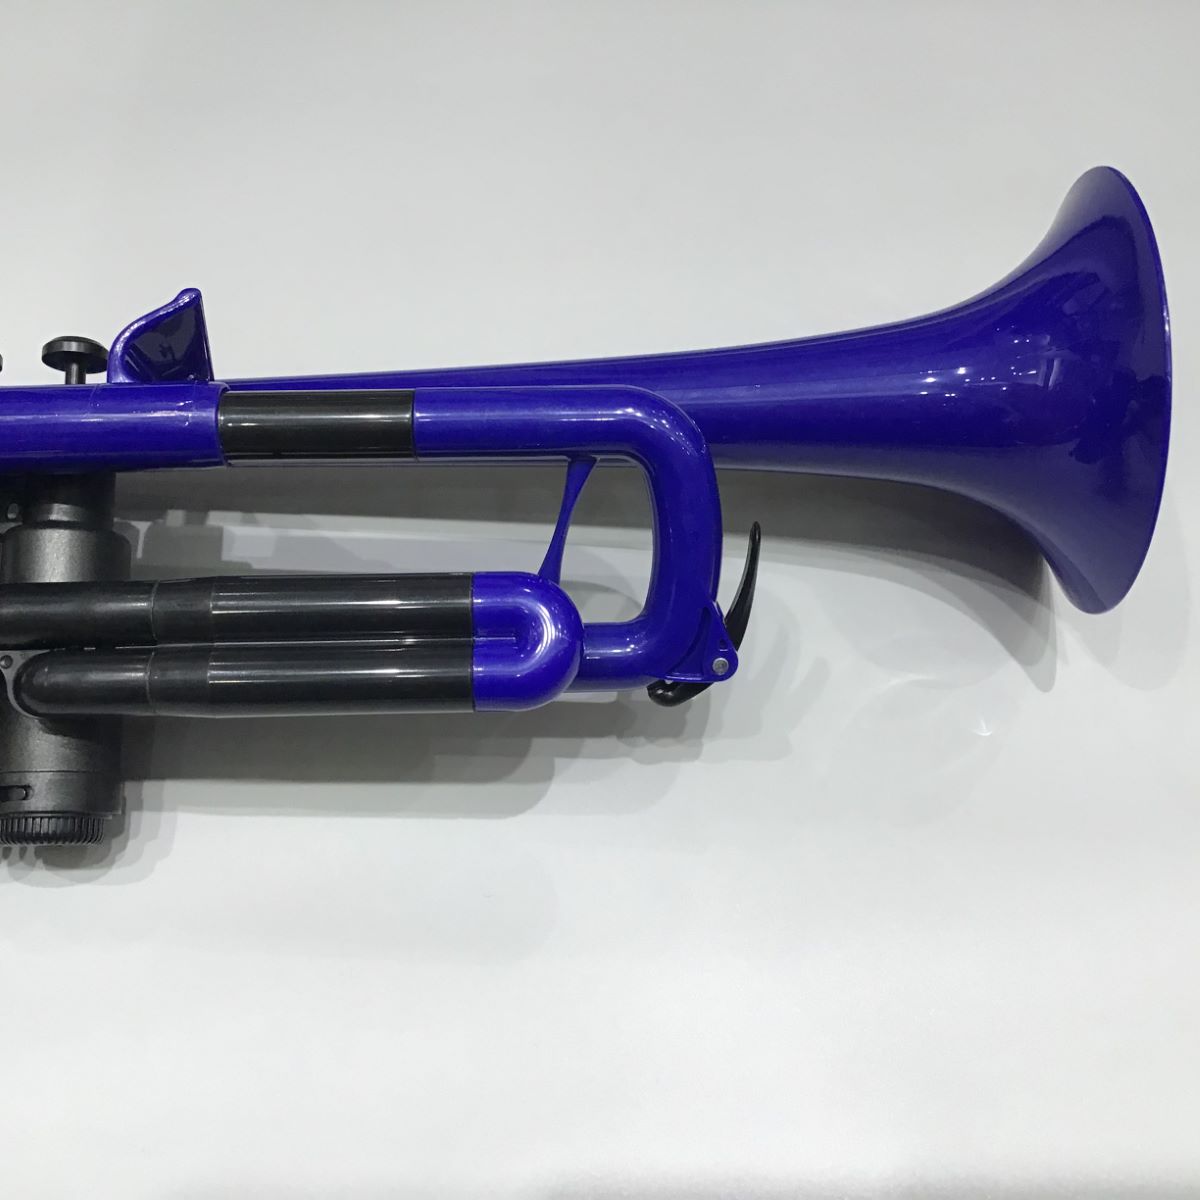 PINSTRUMENTS pTrumpet ブルー プラスチック トランペット 管楽器 Pトランペット trumpet blue PTRUMPET1B ミュート セット 2　北海道 沖縄 離島不可